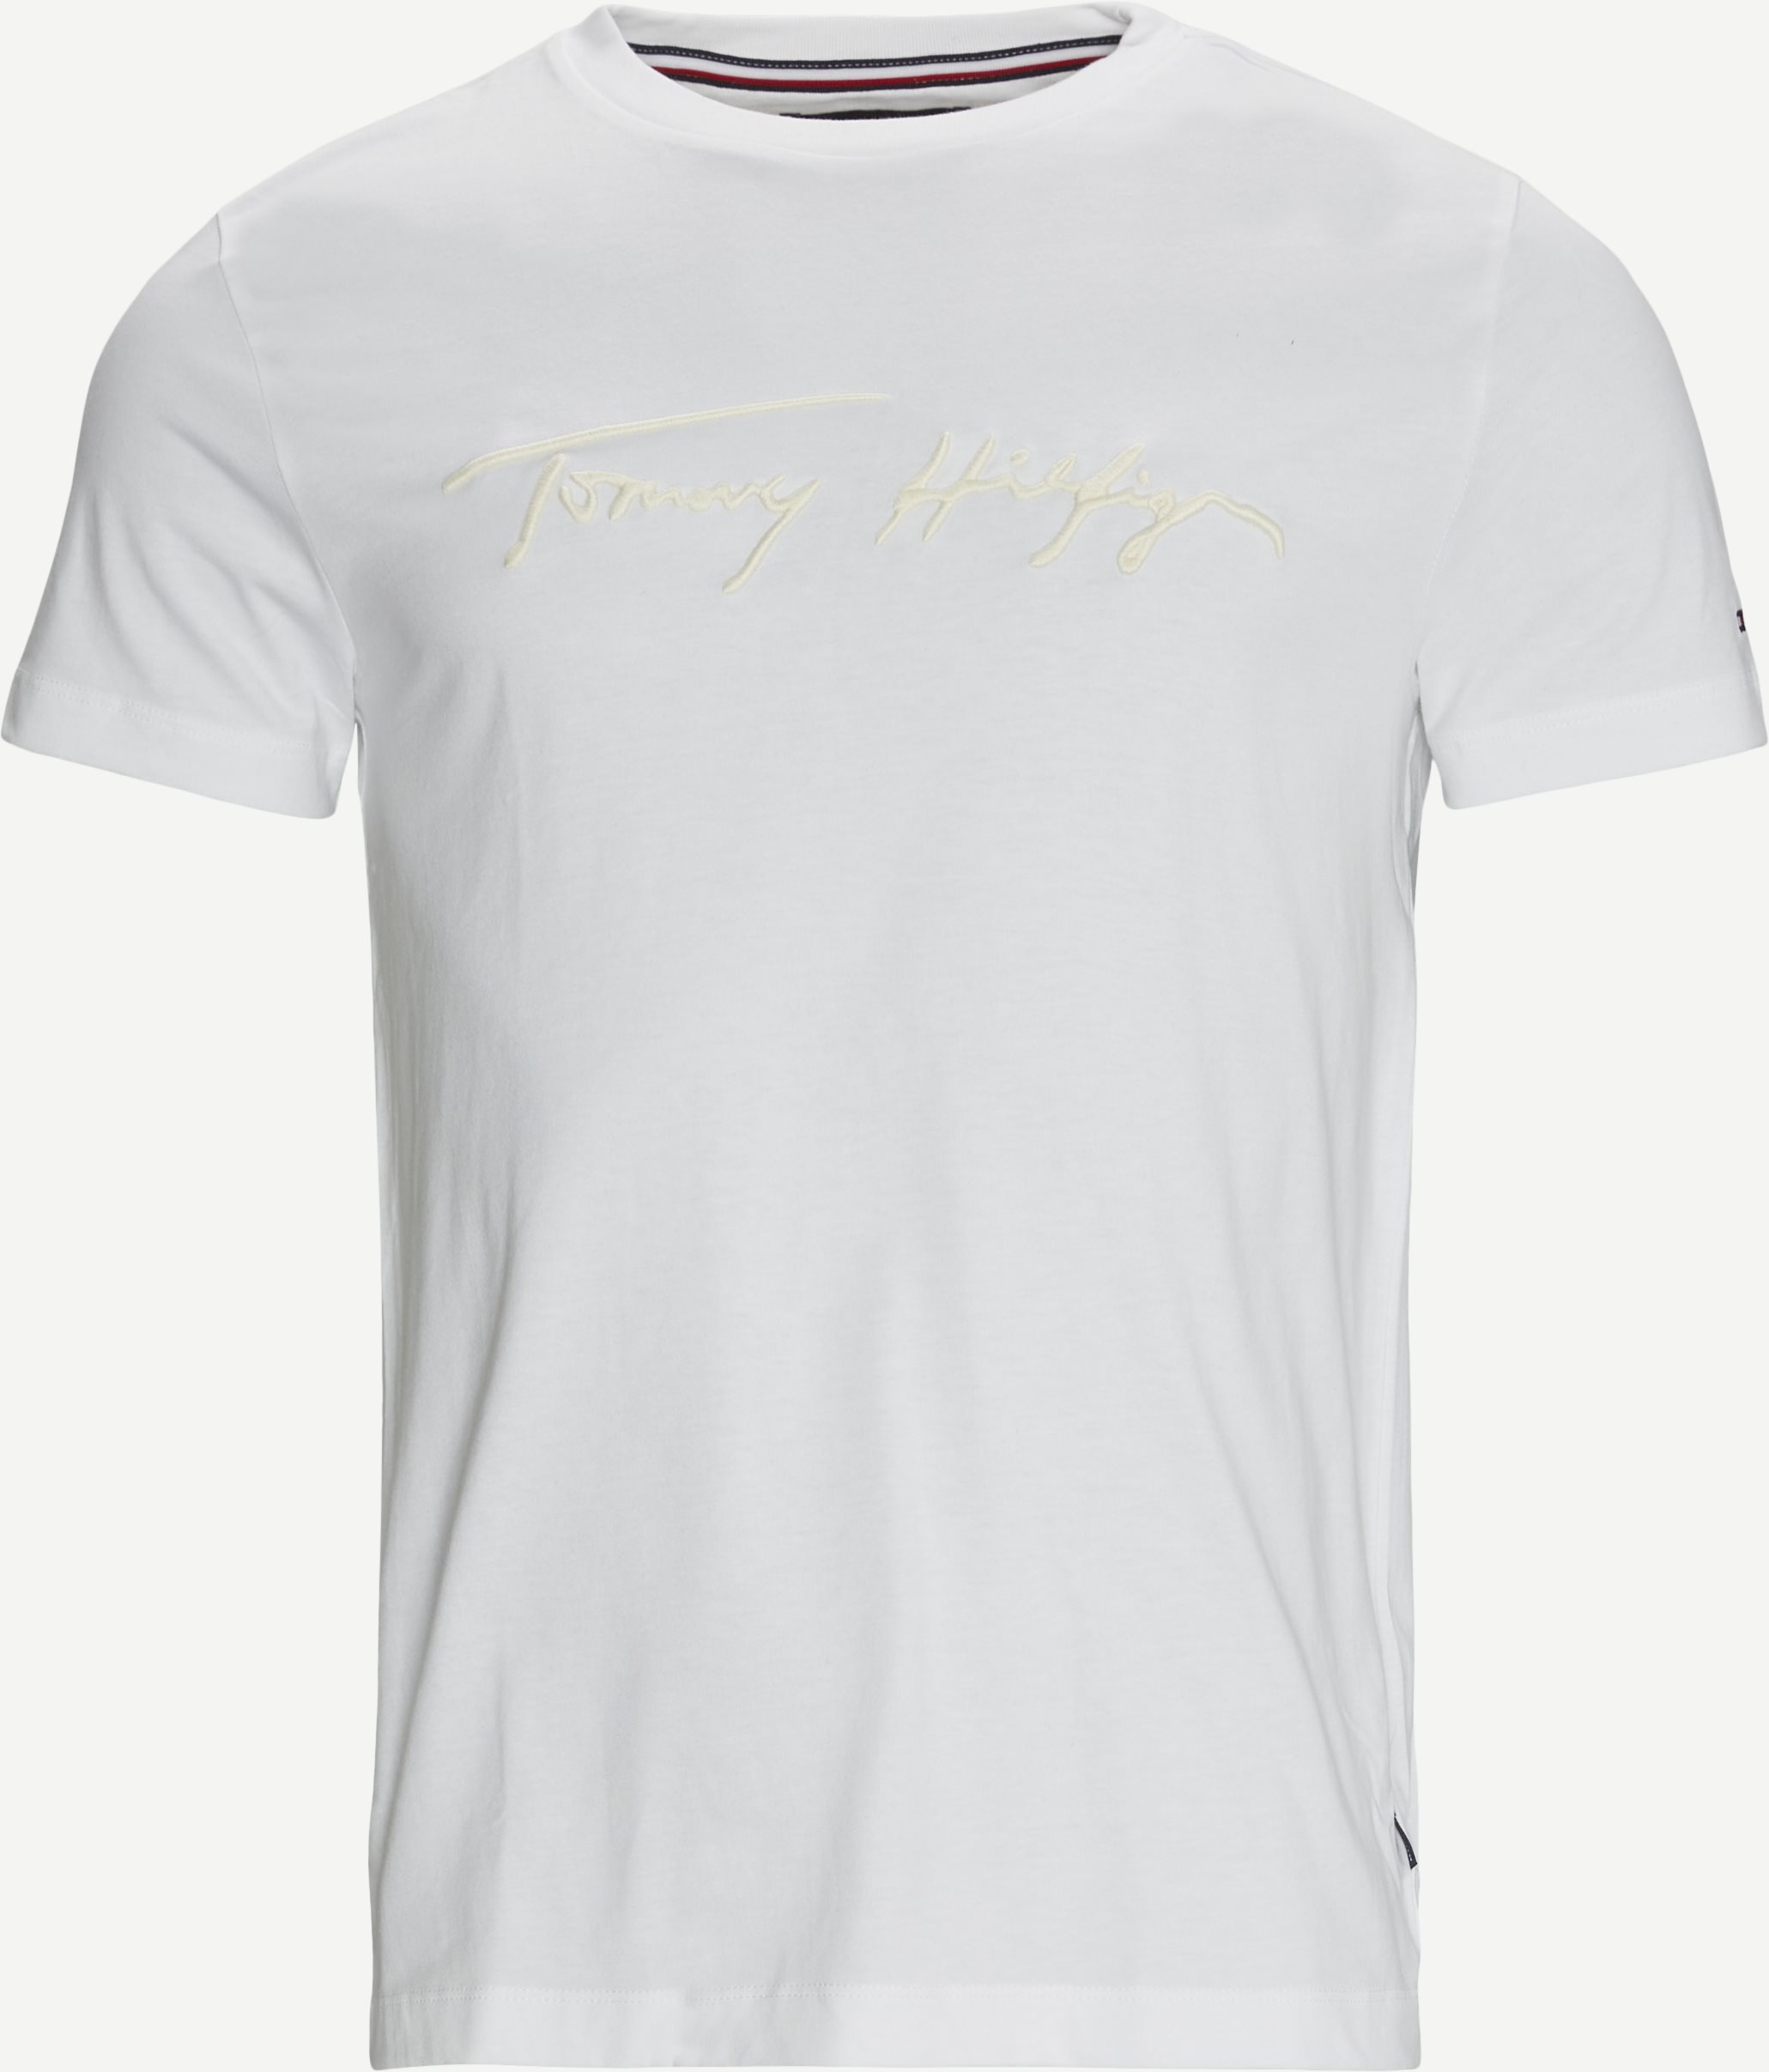 Signature Graphic T-shirt - T-shirts - Regular fit - White